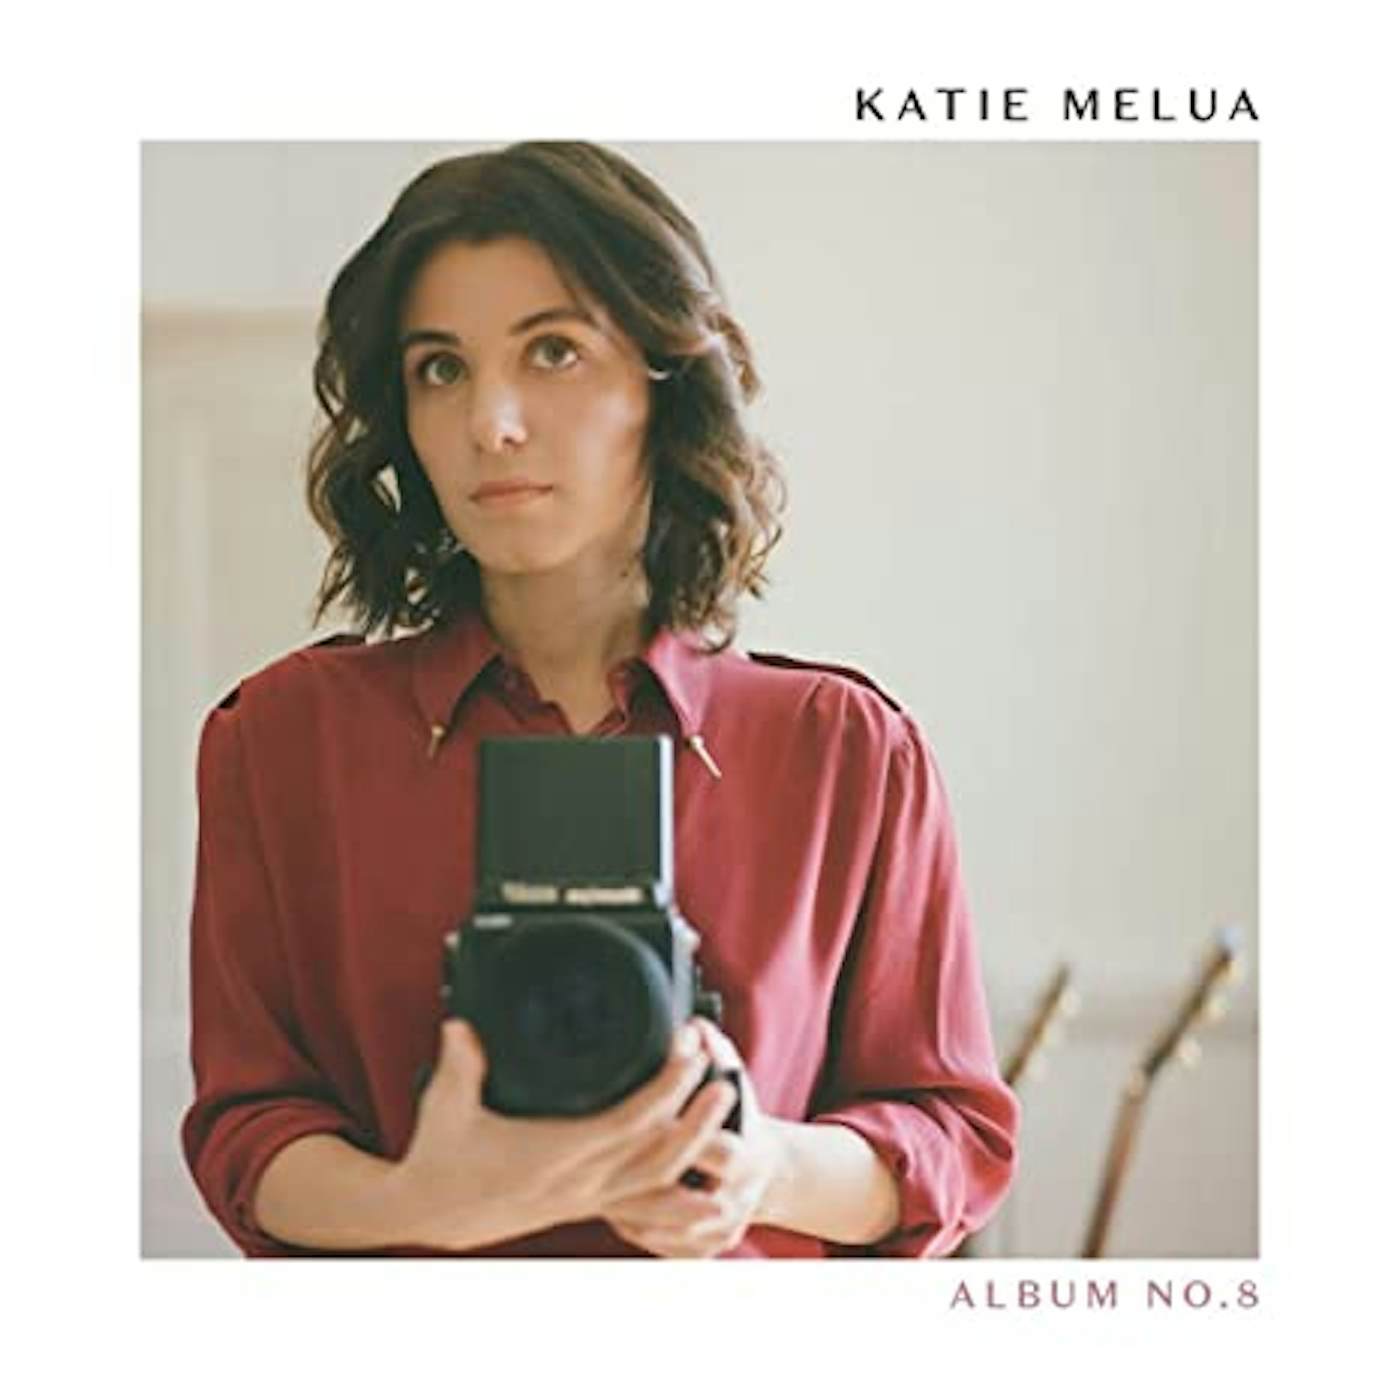 Katie Melua Album No. 8 Vinyl Record